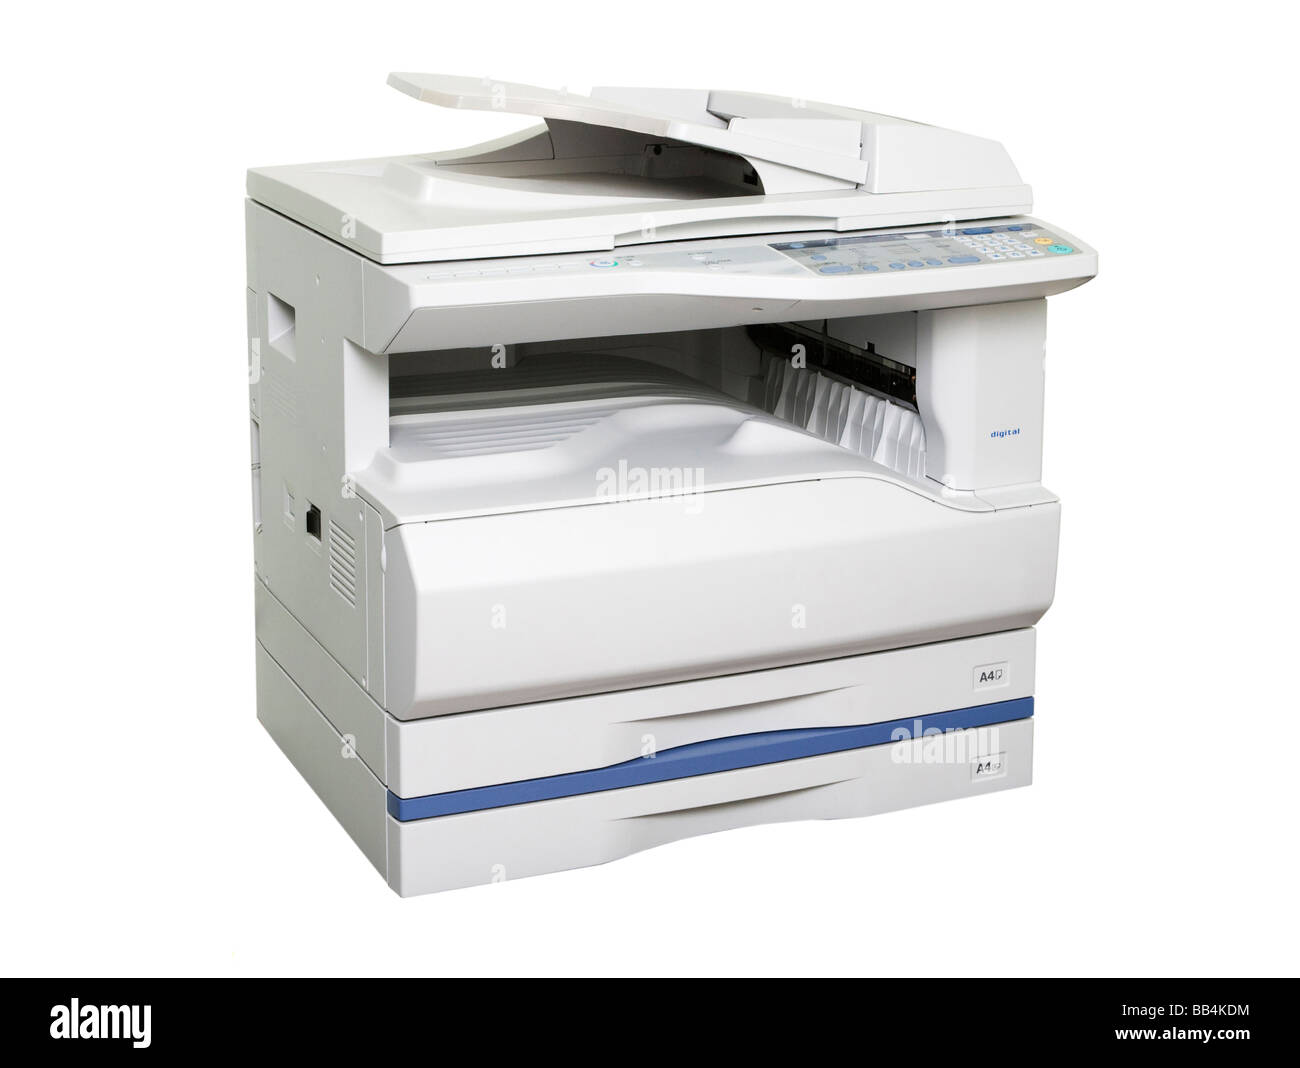 A3 size photocopier & multifunction printer / scanner Stock Photo - Alamy